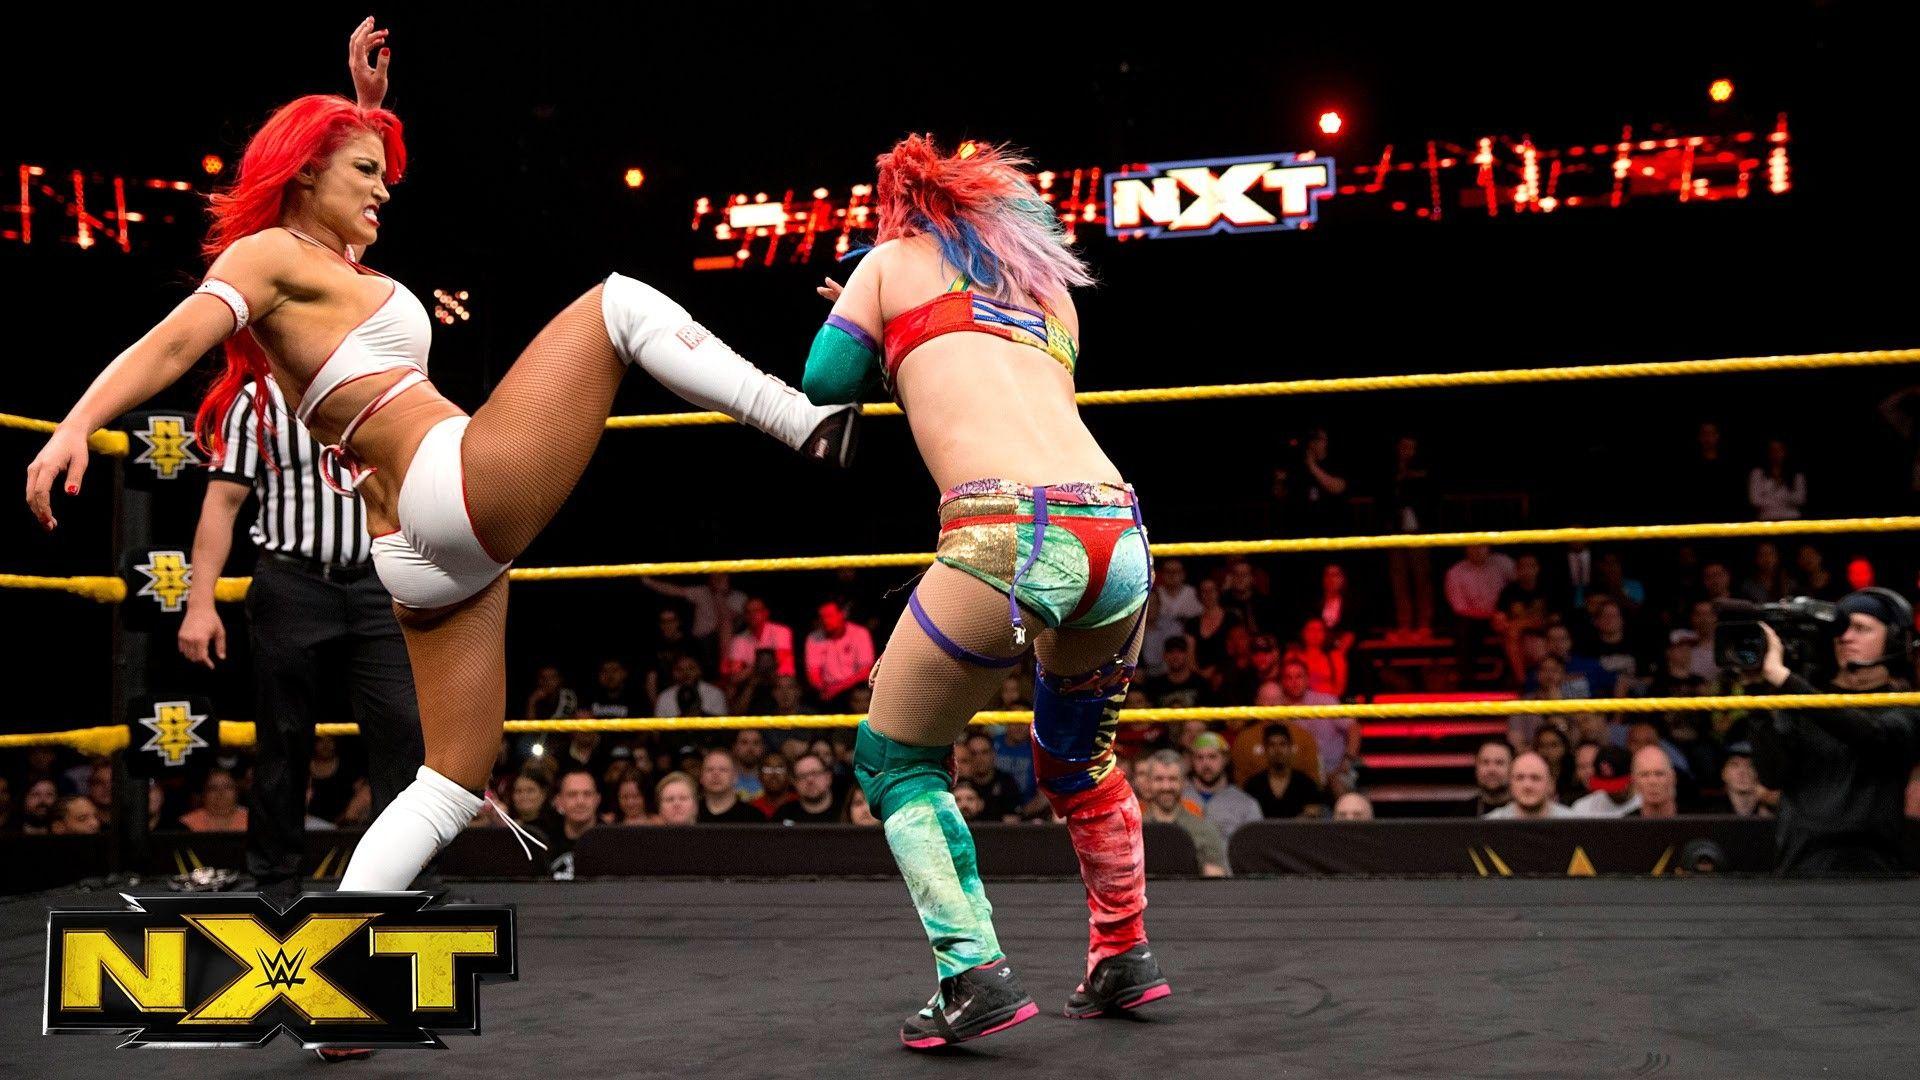 Asuka Vs Eva Marie in Girls Fight of WWE HD Wallpaper